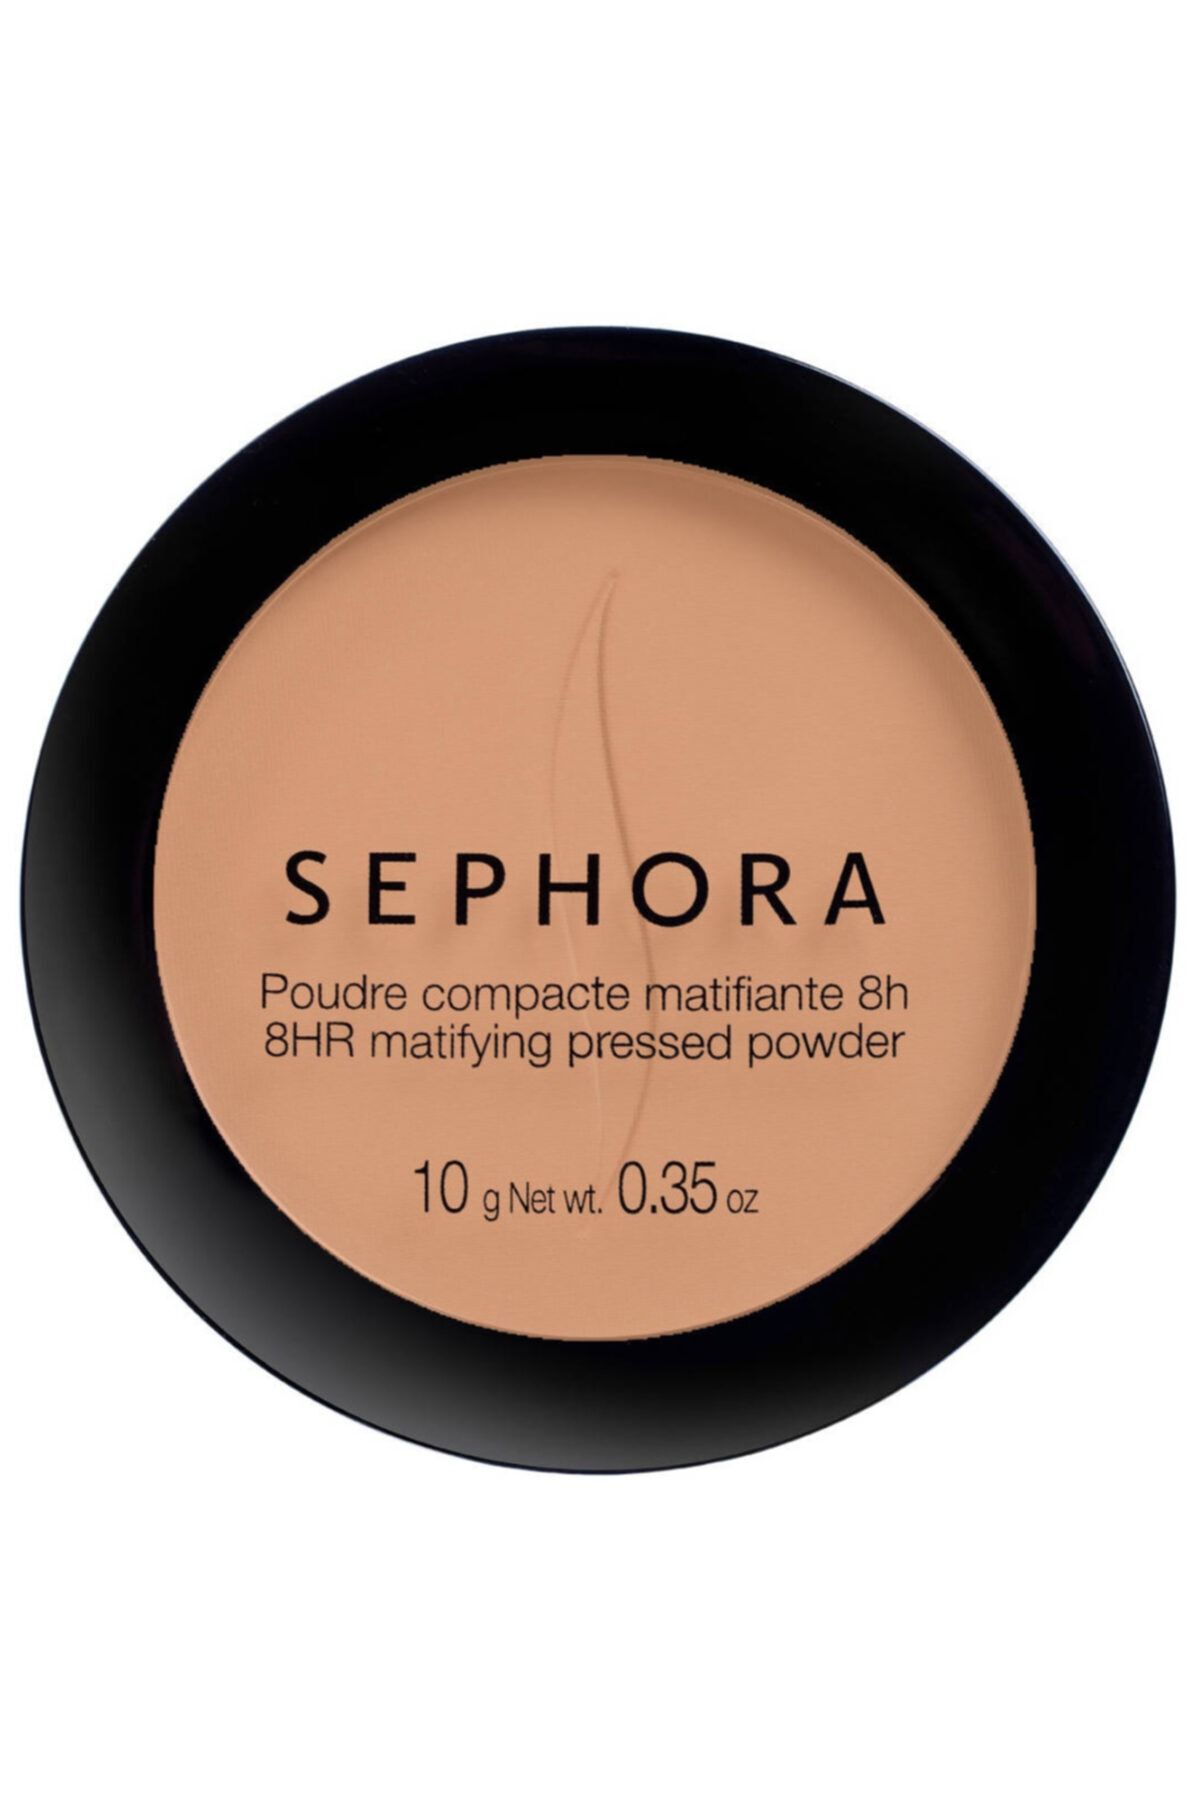 Sephora 8hr Mattifying Pressed Powder